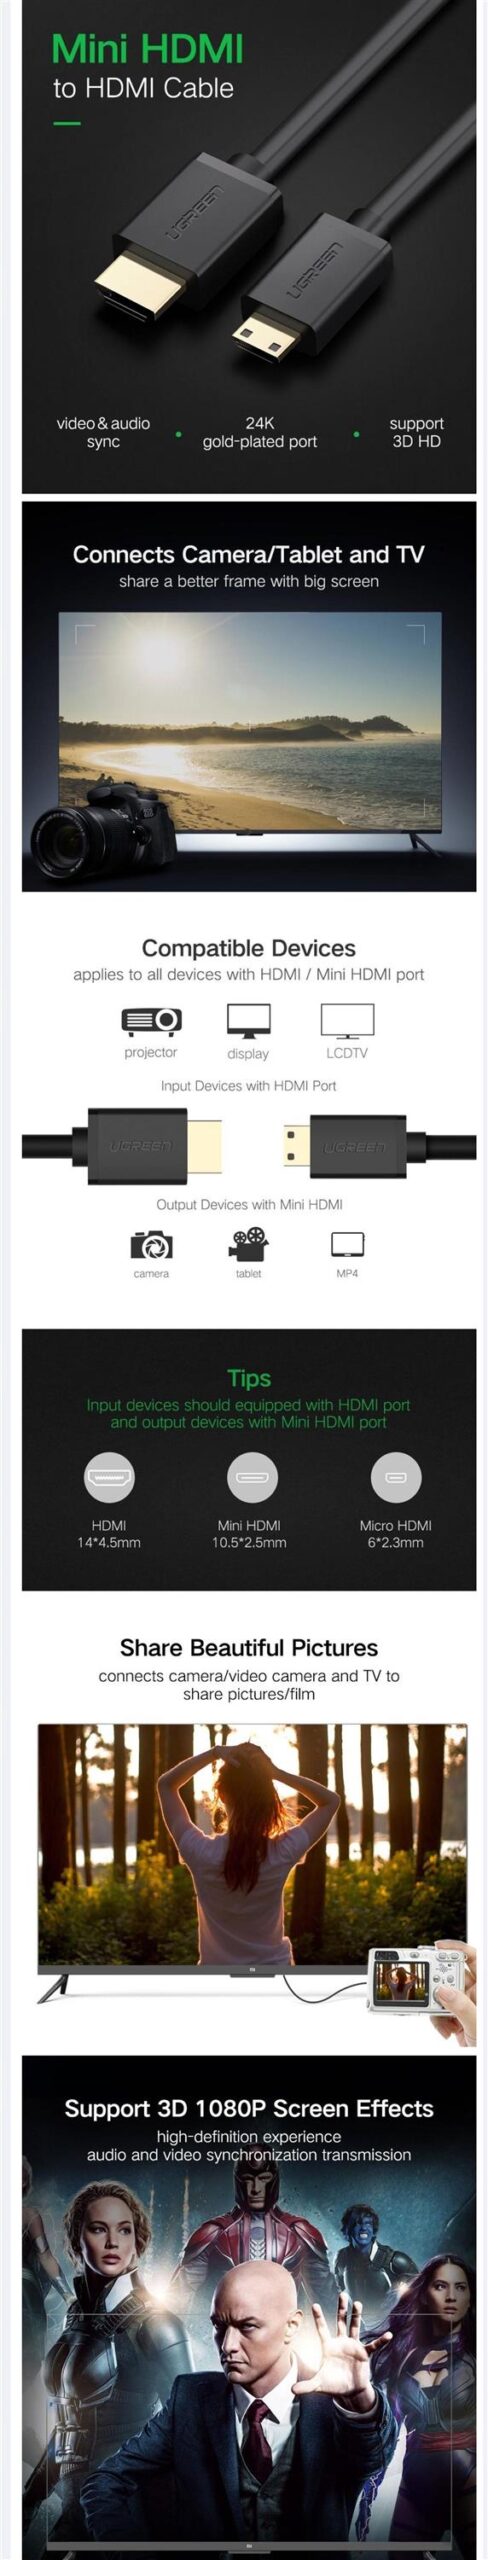 HDMI კაბელი UGREEN 11167, Mini HDMI to HDMI 2.0 4K Cable, 1.5m, Black